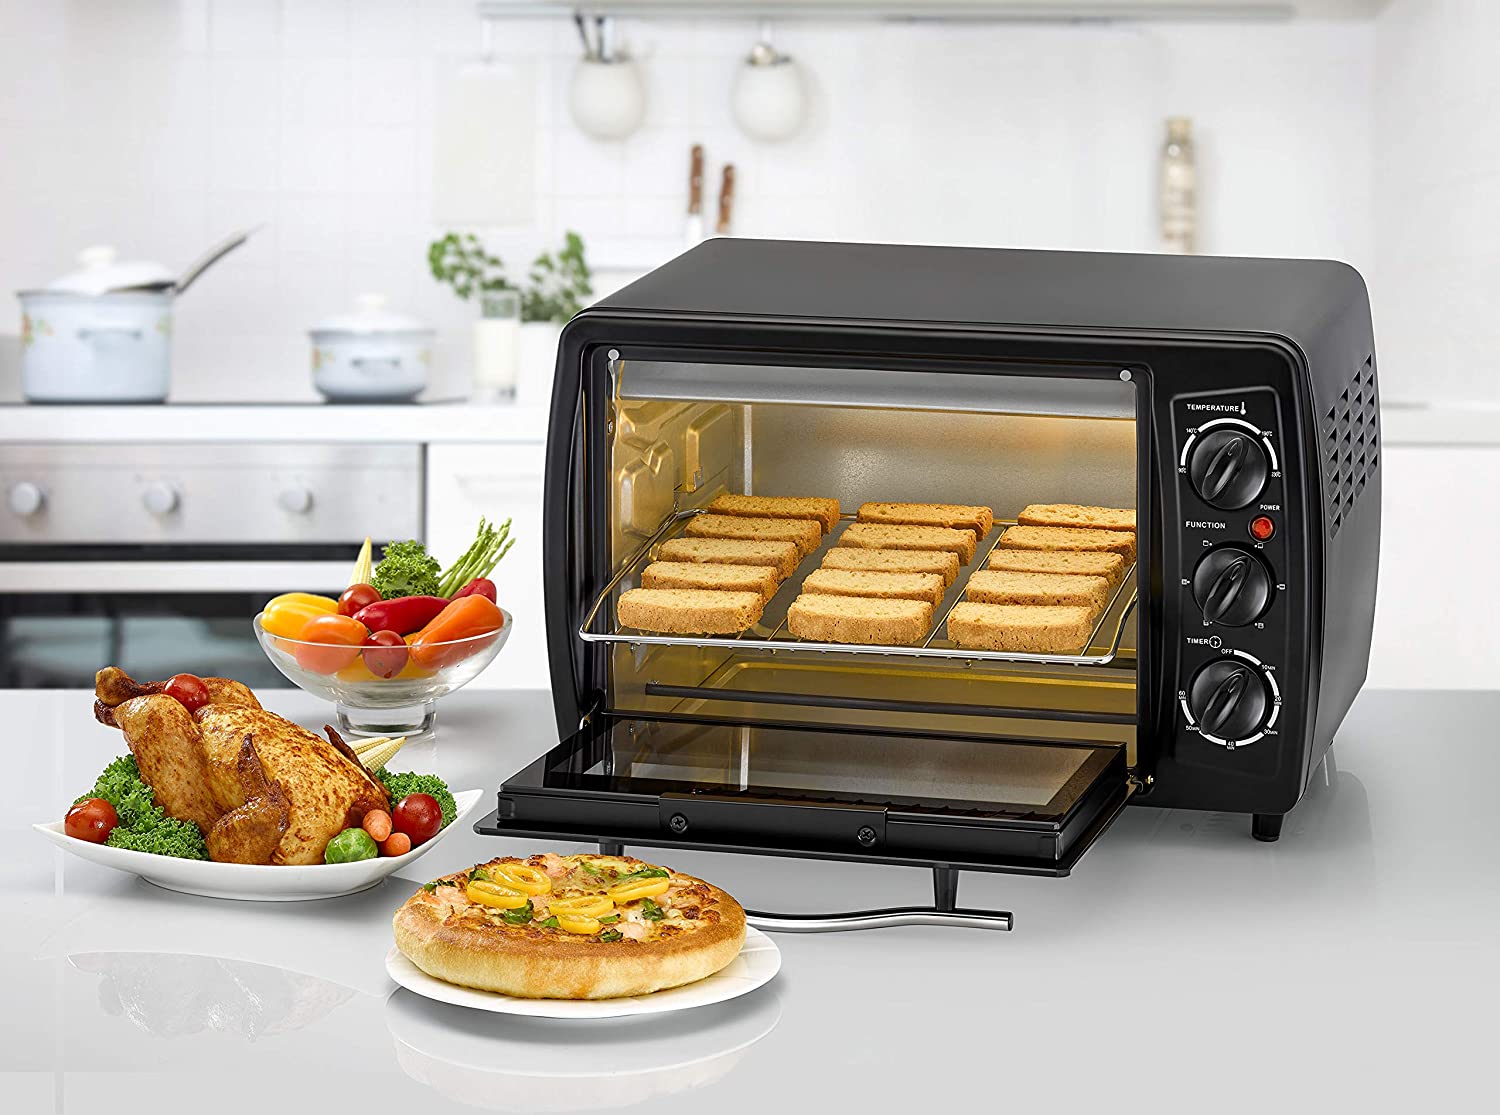 BLACK+DECKER 1380W 19L Toaster Oven, Double Grill And Double Glass Door فرن تحميص مع مشواة مزدوجة زجاجية من بلاك اند ديكر